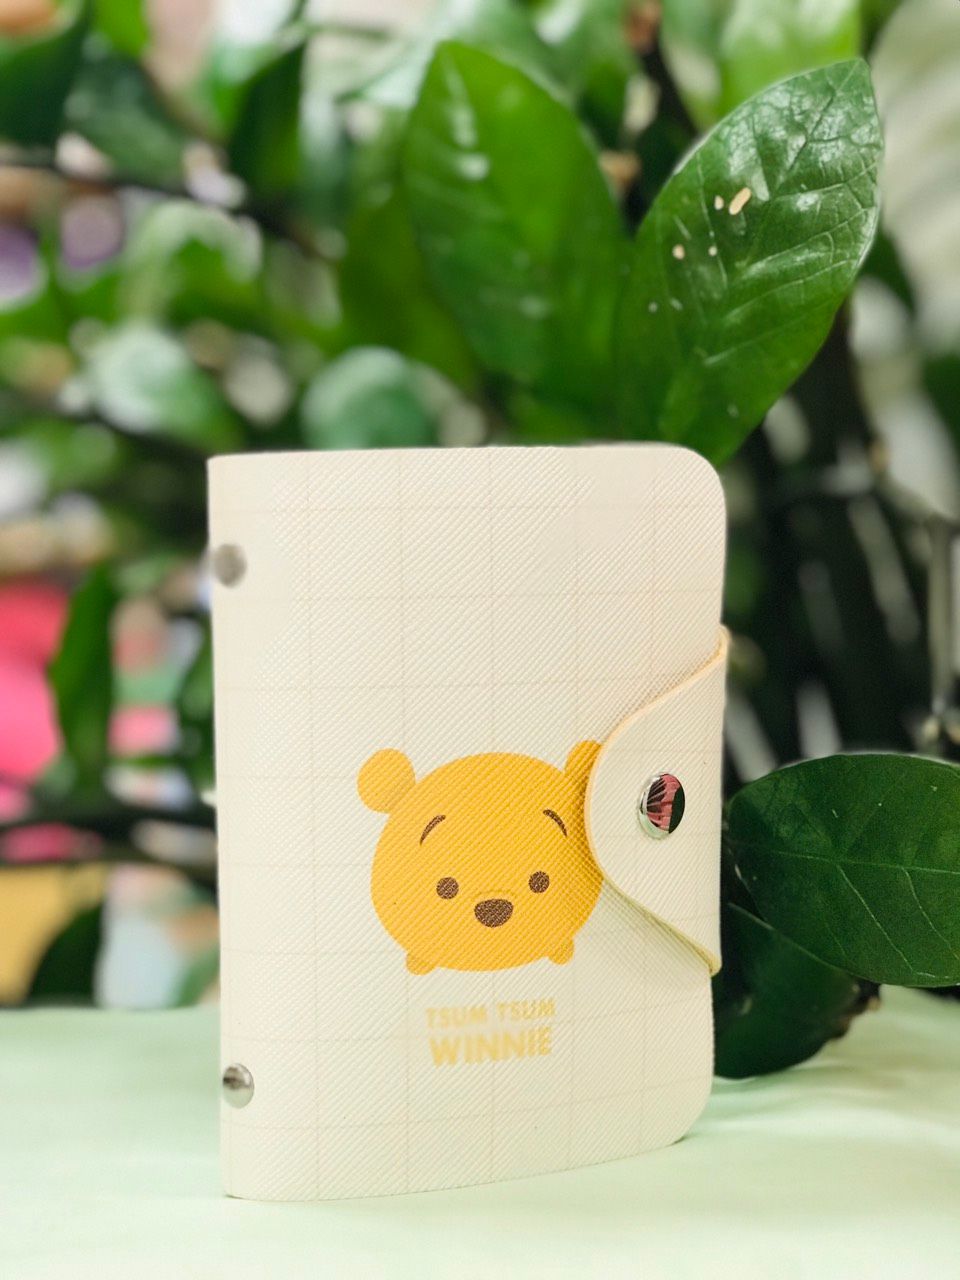  Bóp Card Gấu Pooh 